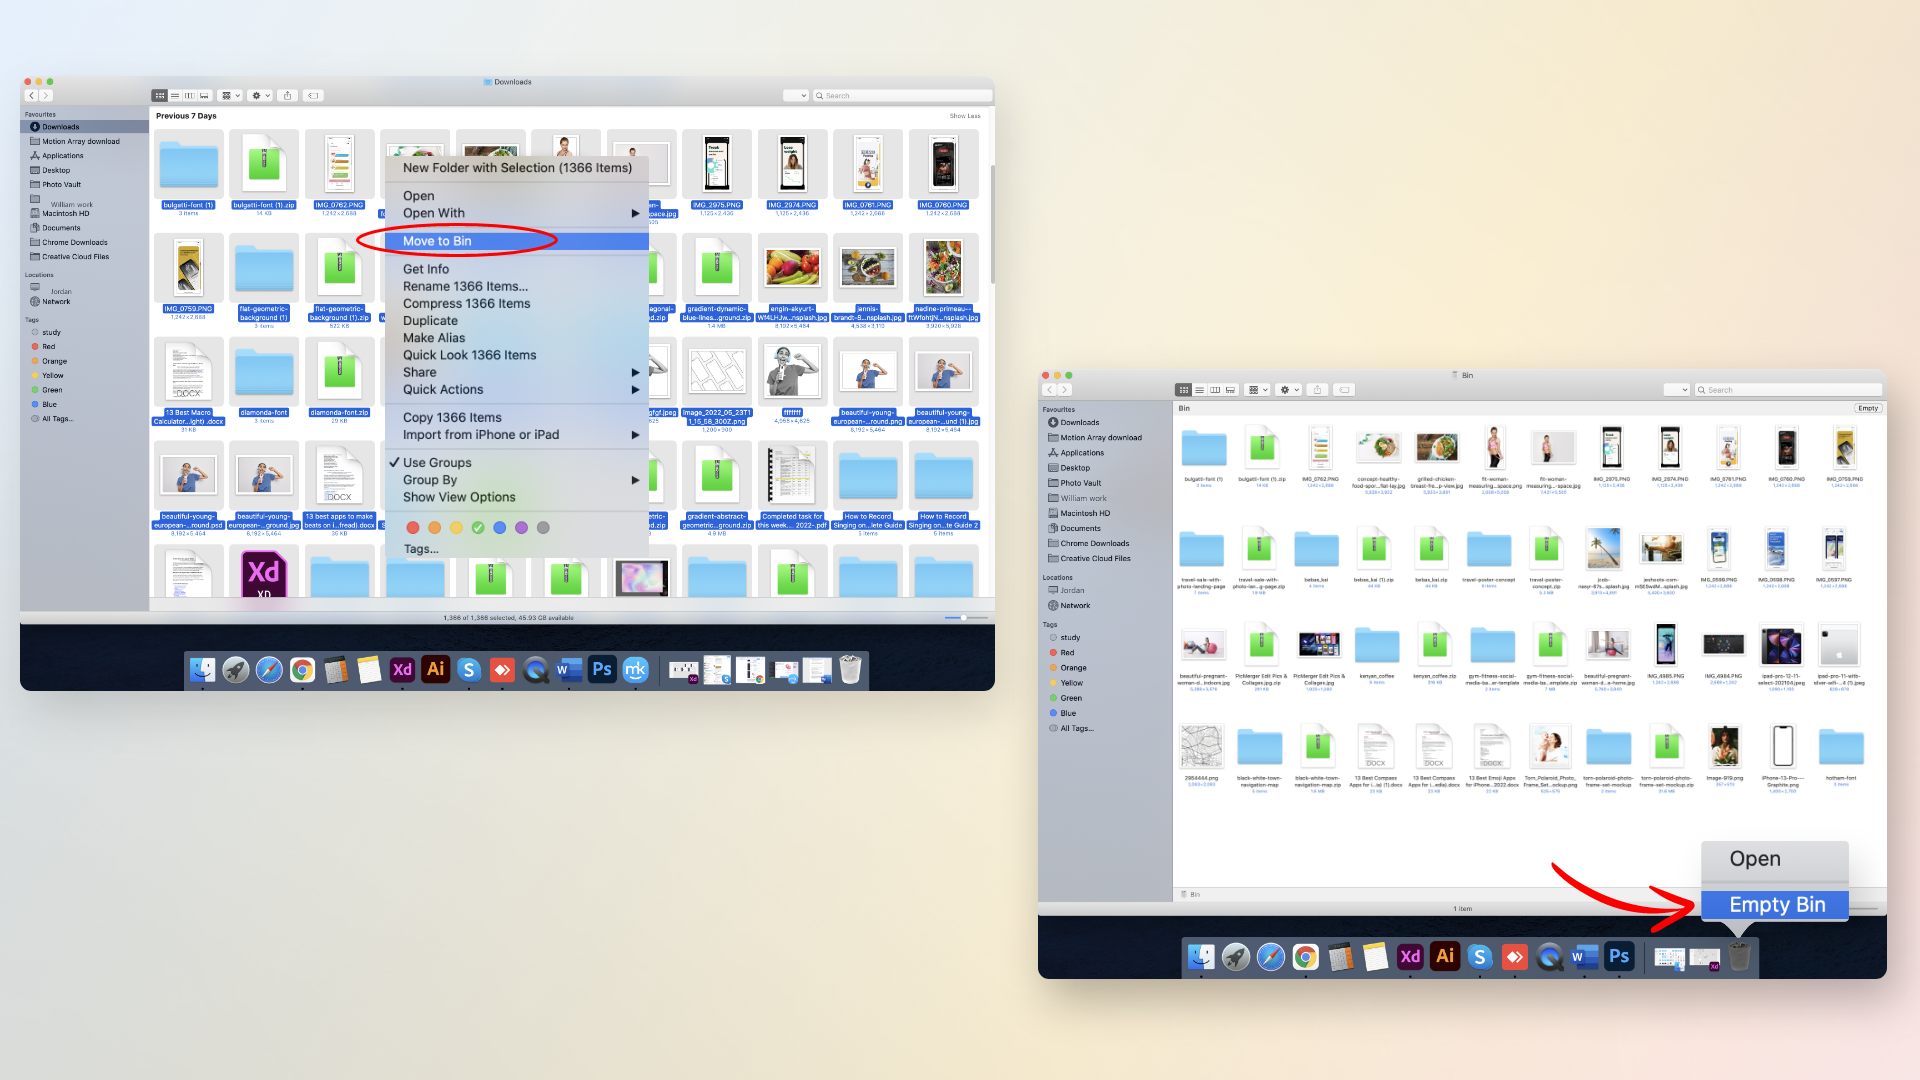 Schritt-für-Schritt-Anleitung zum wie man mehrere Downloads auf dem Mac manuell löscht 02